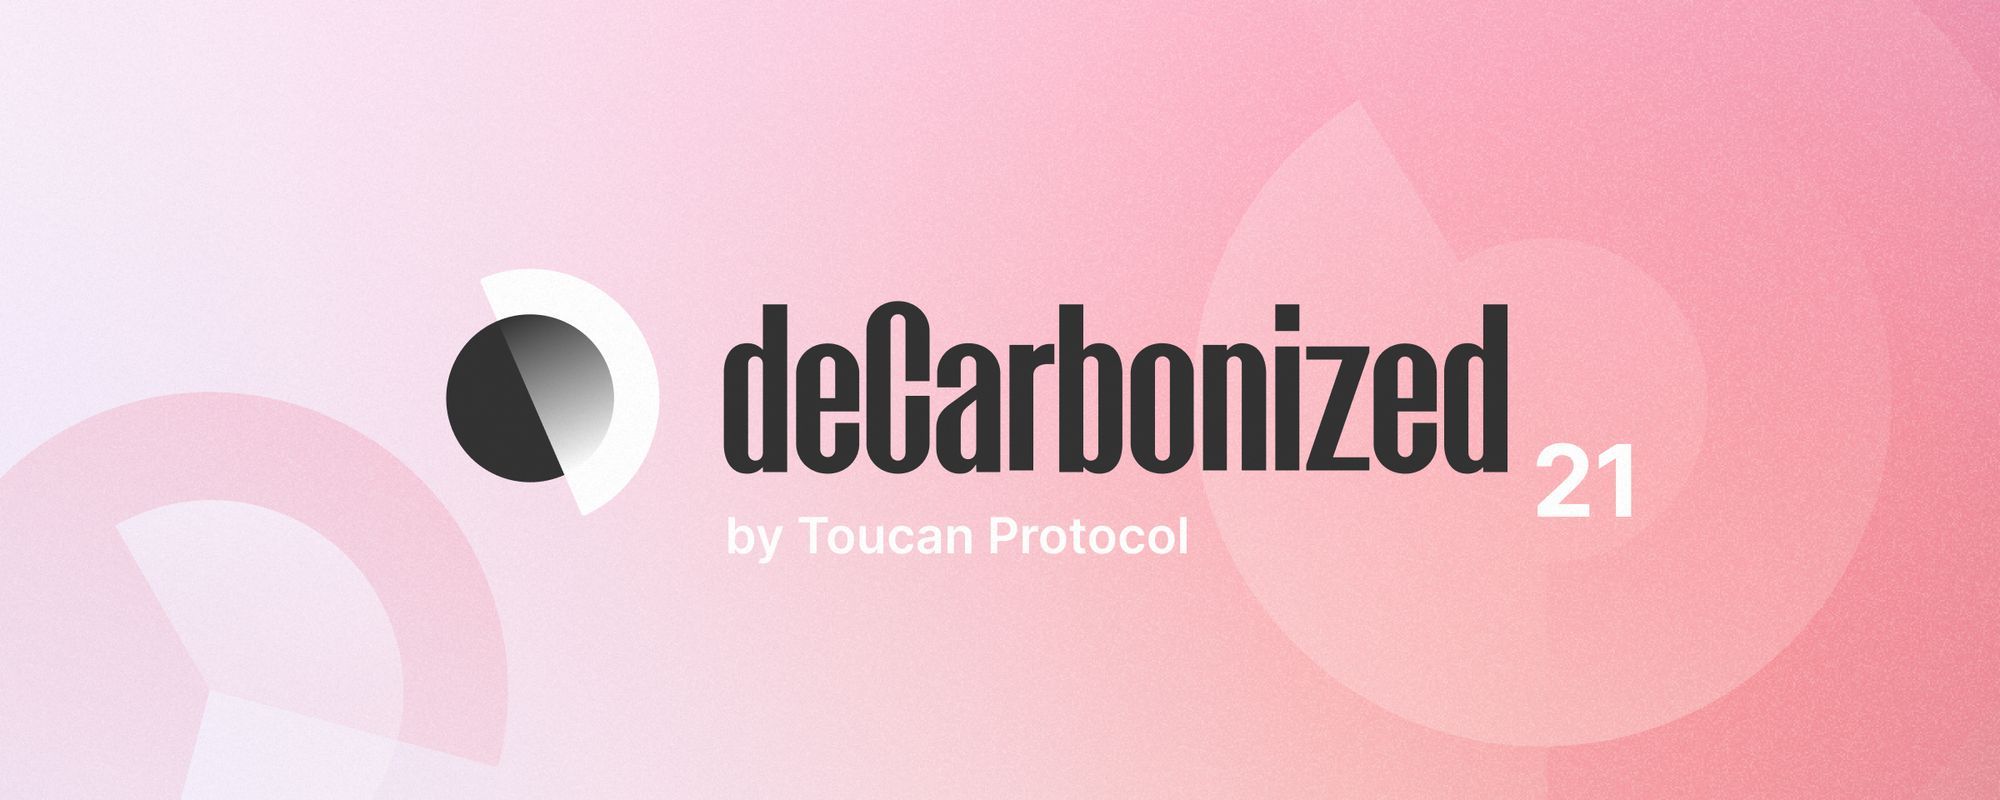 deCarbonized #21: Blockchain for accelerating energy transition; Funding for biodiversity tokenization